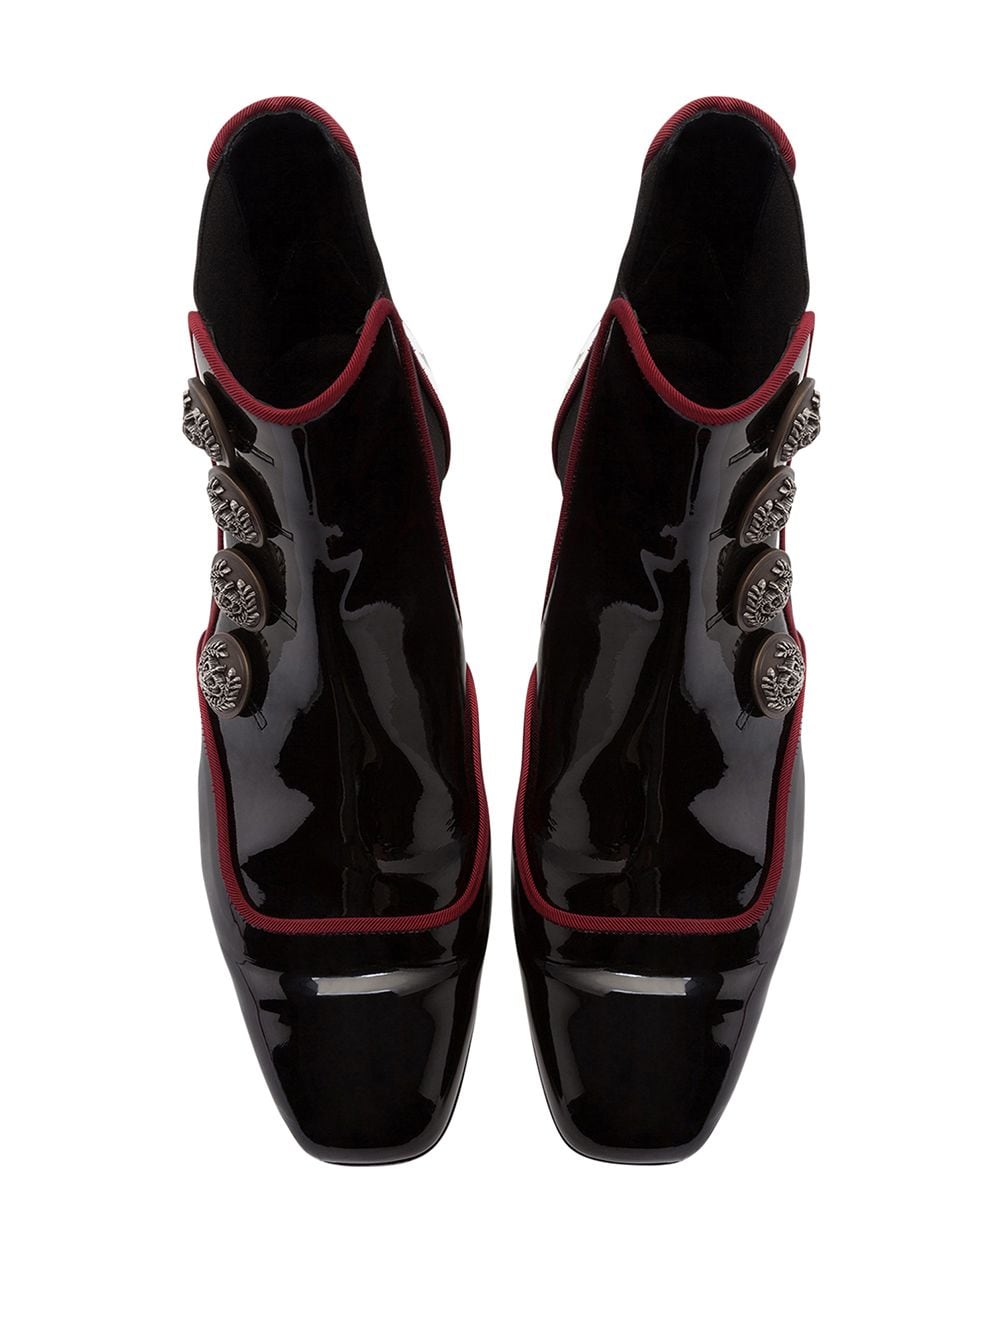 фото Dolce & gabbana ботинки челси jackie с декоративными пуговицами